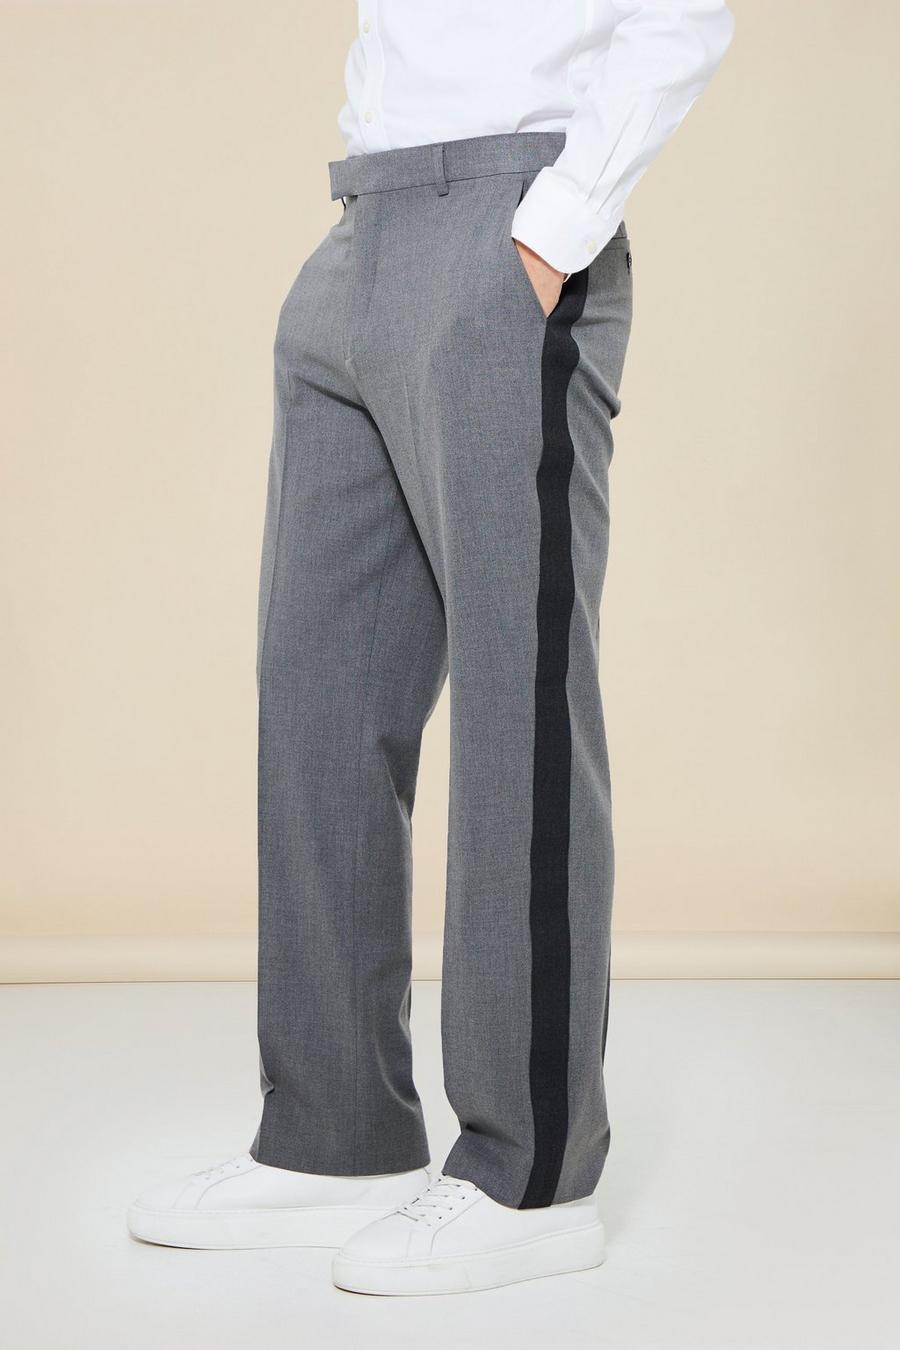 Pantaloni completo rilassati effetto patchwork, Grey grigio